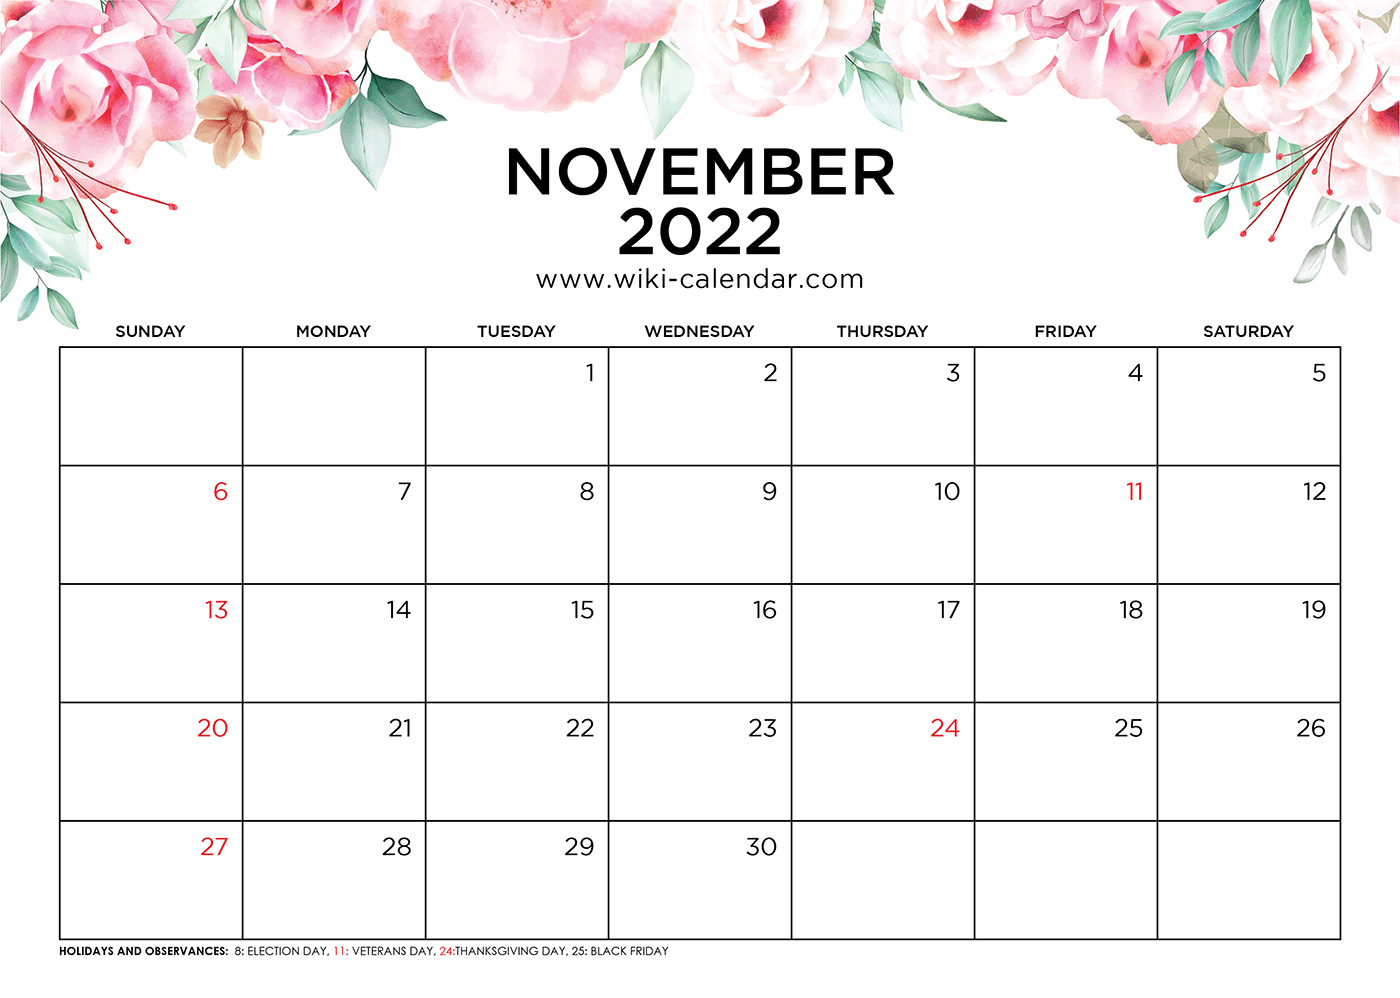 Novemebr 2022 Calendar Free Printable November 2022 Calendars - Wiki Calendar